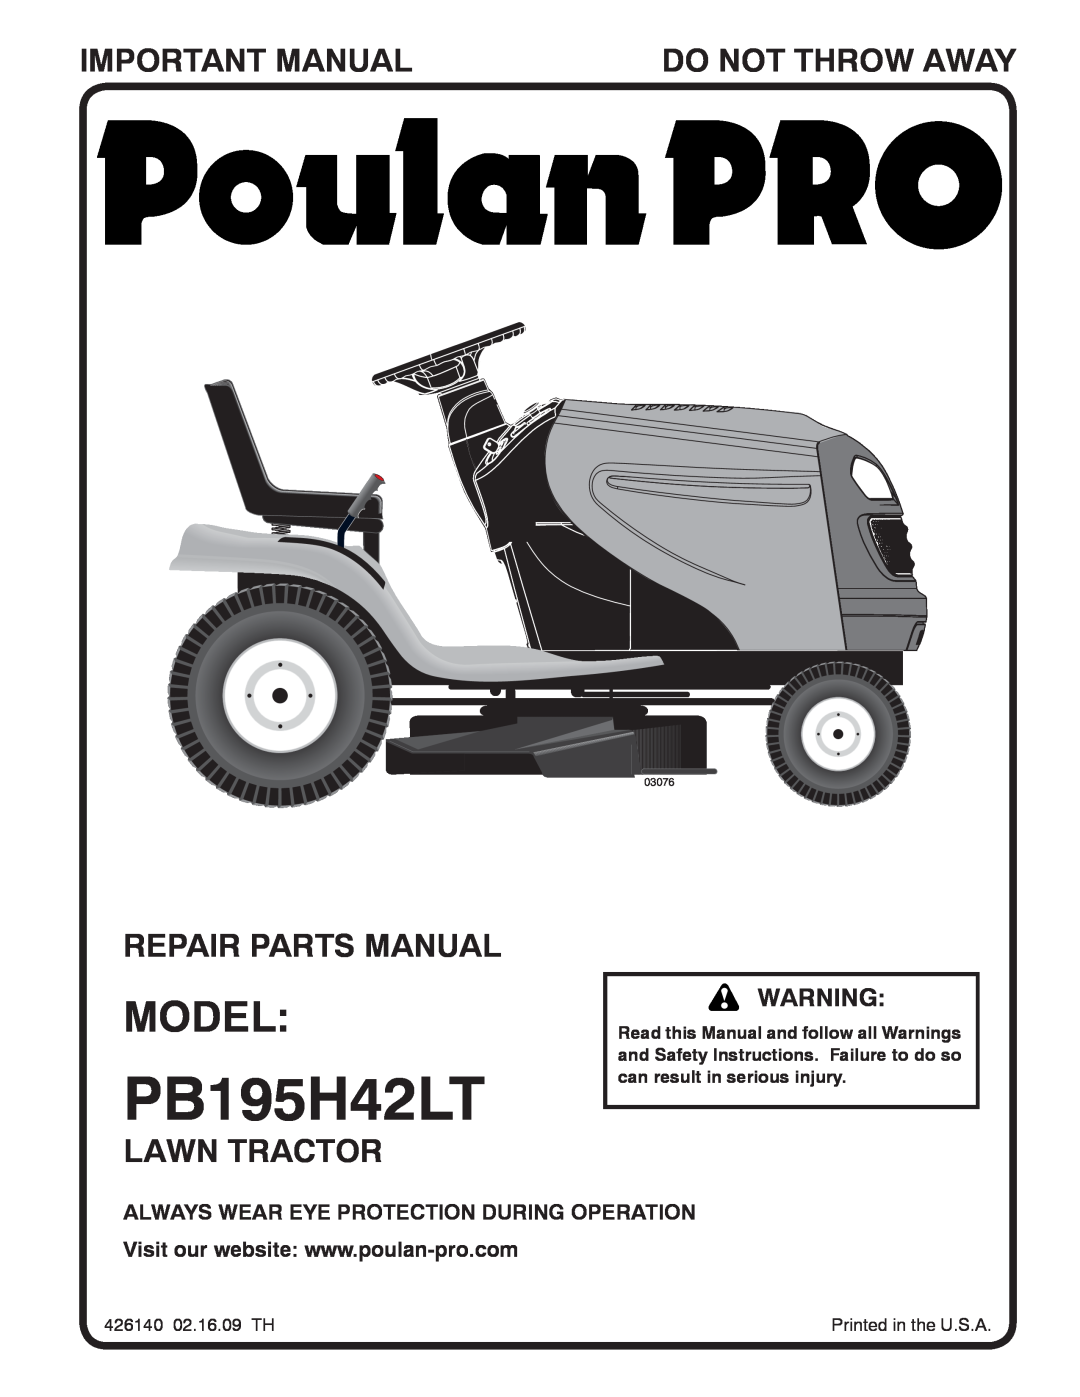 Poulan 426140 manual Model, Important Manual, Do Not Throw Away, Repair Parts Manual, Lawn Tractor, PB195H42LT, 03076 